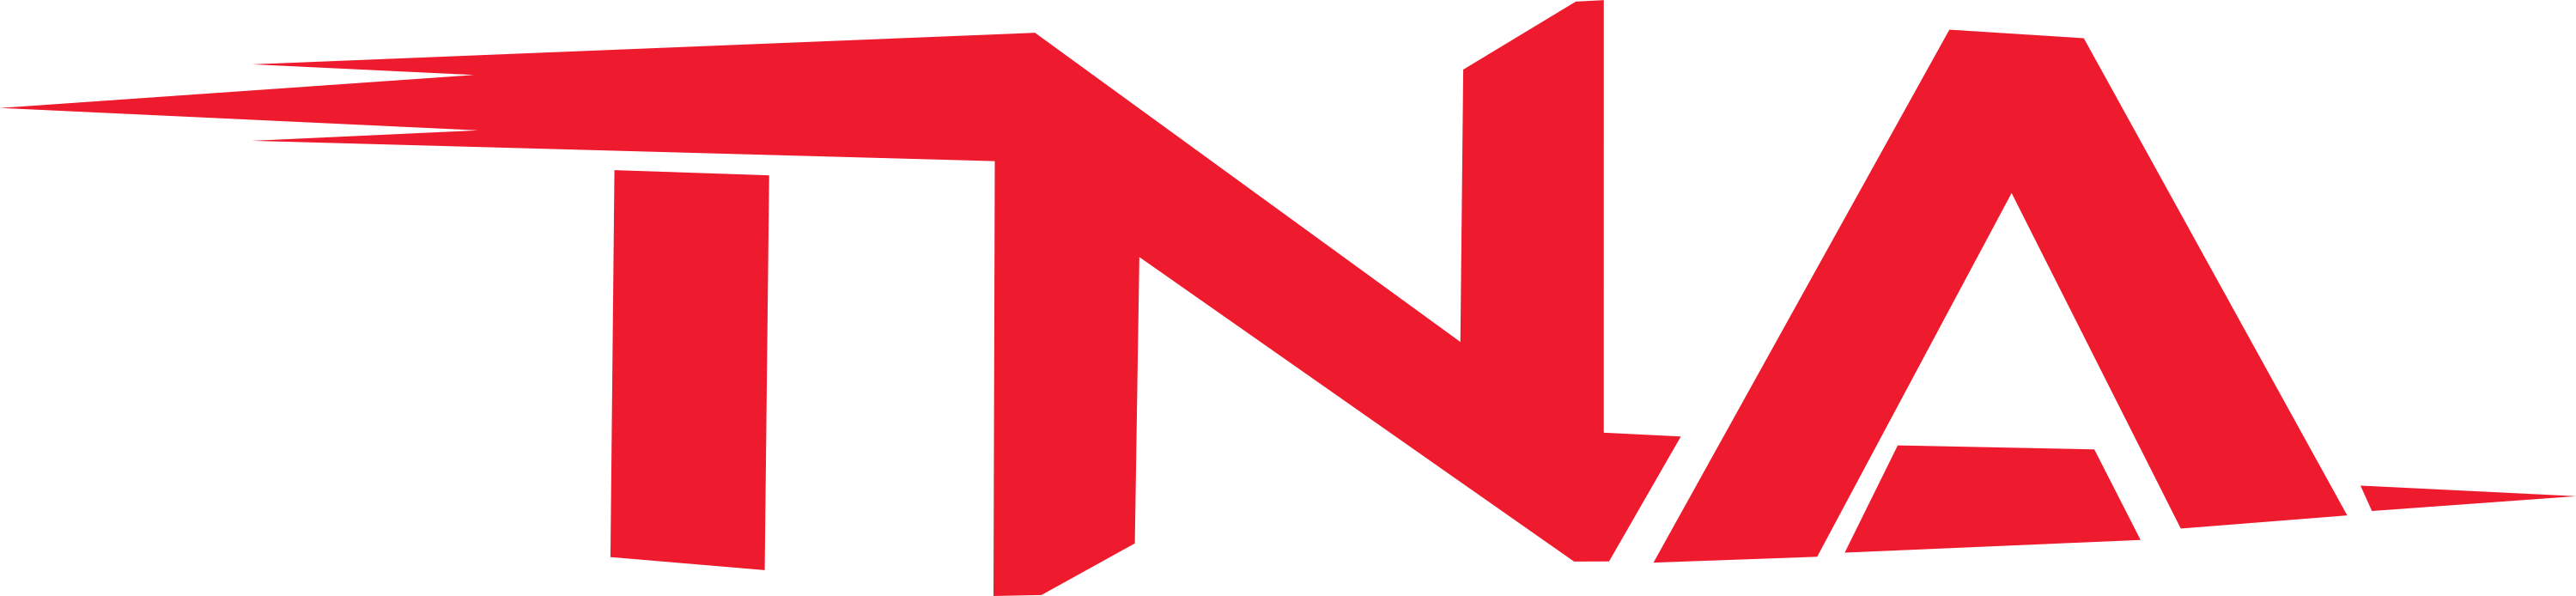 TNA (2010-2017) Logo (Red) by DarkVoidPictures on DeviantArt